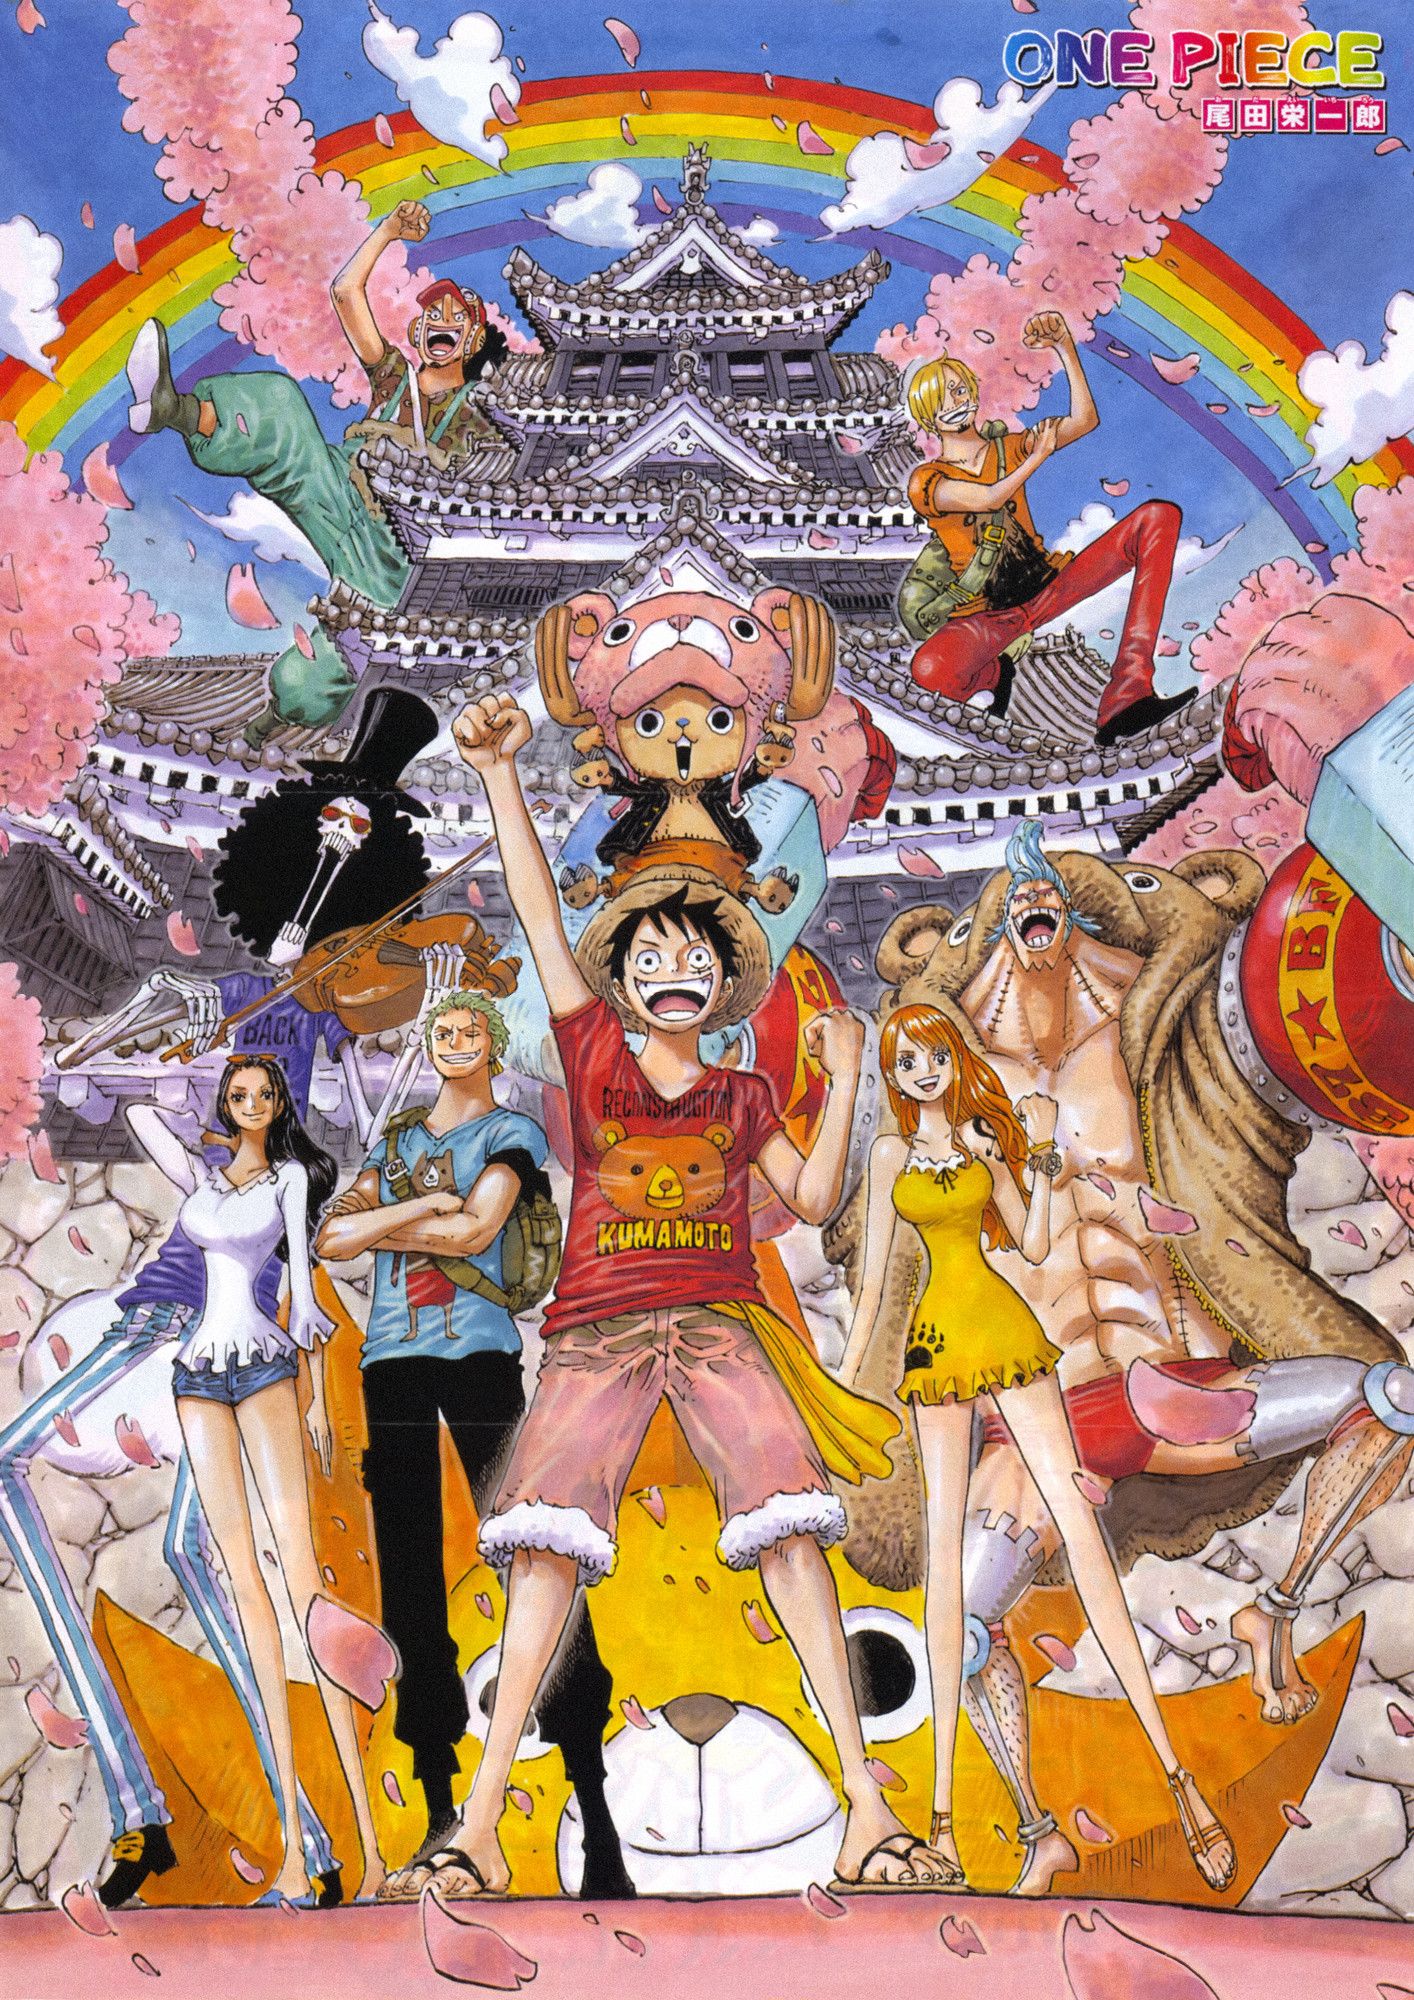 One Piece Manga Wallpaper 2020